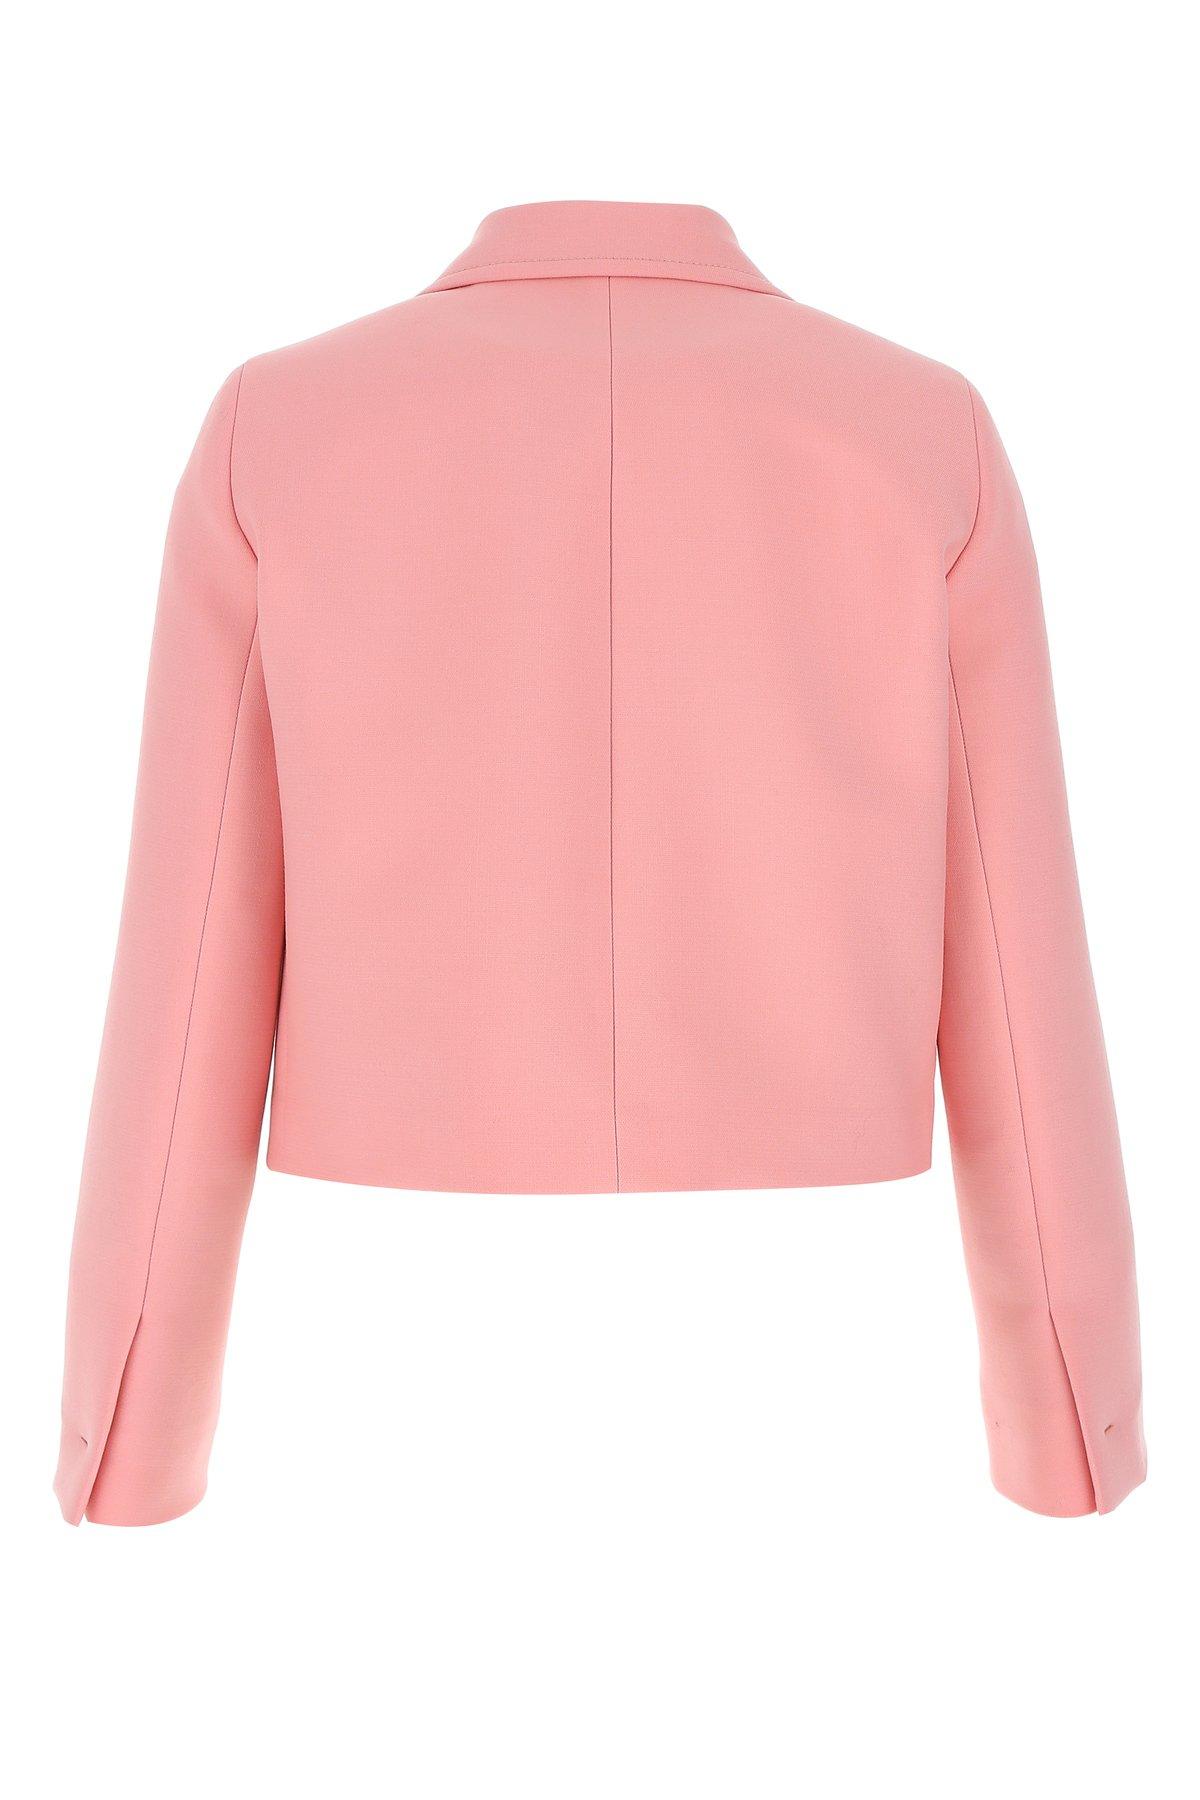 Prada Wool Cropped Blazer in Pink - Lyst